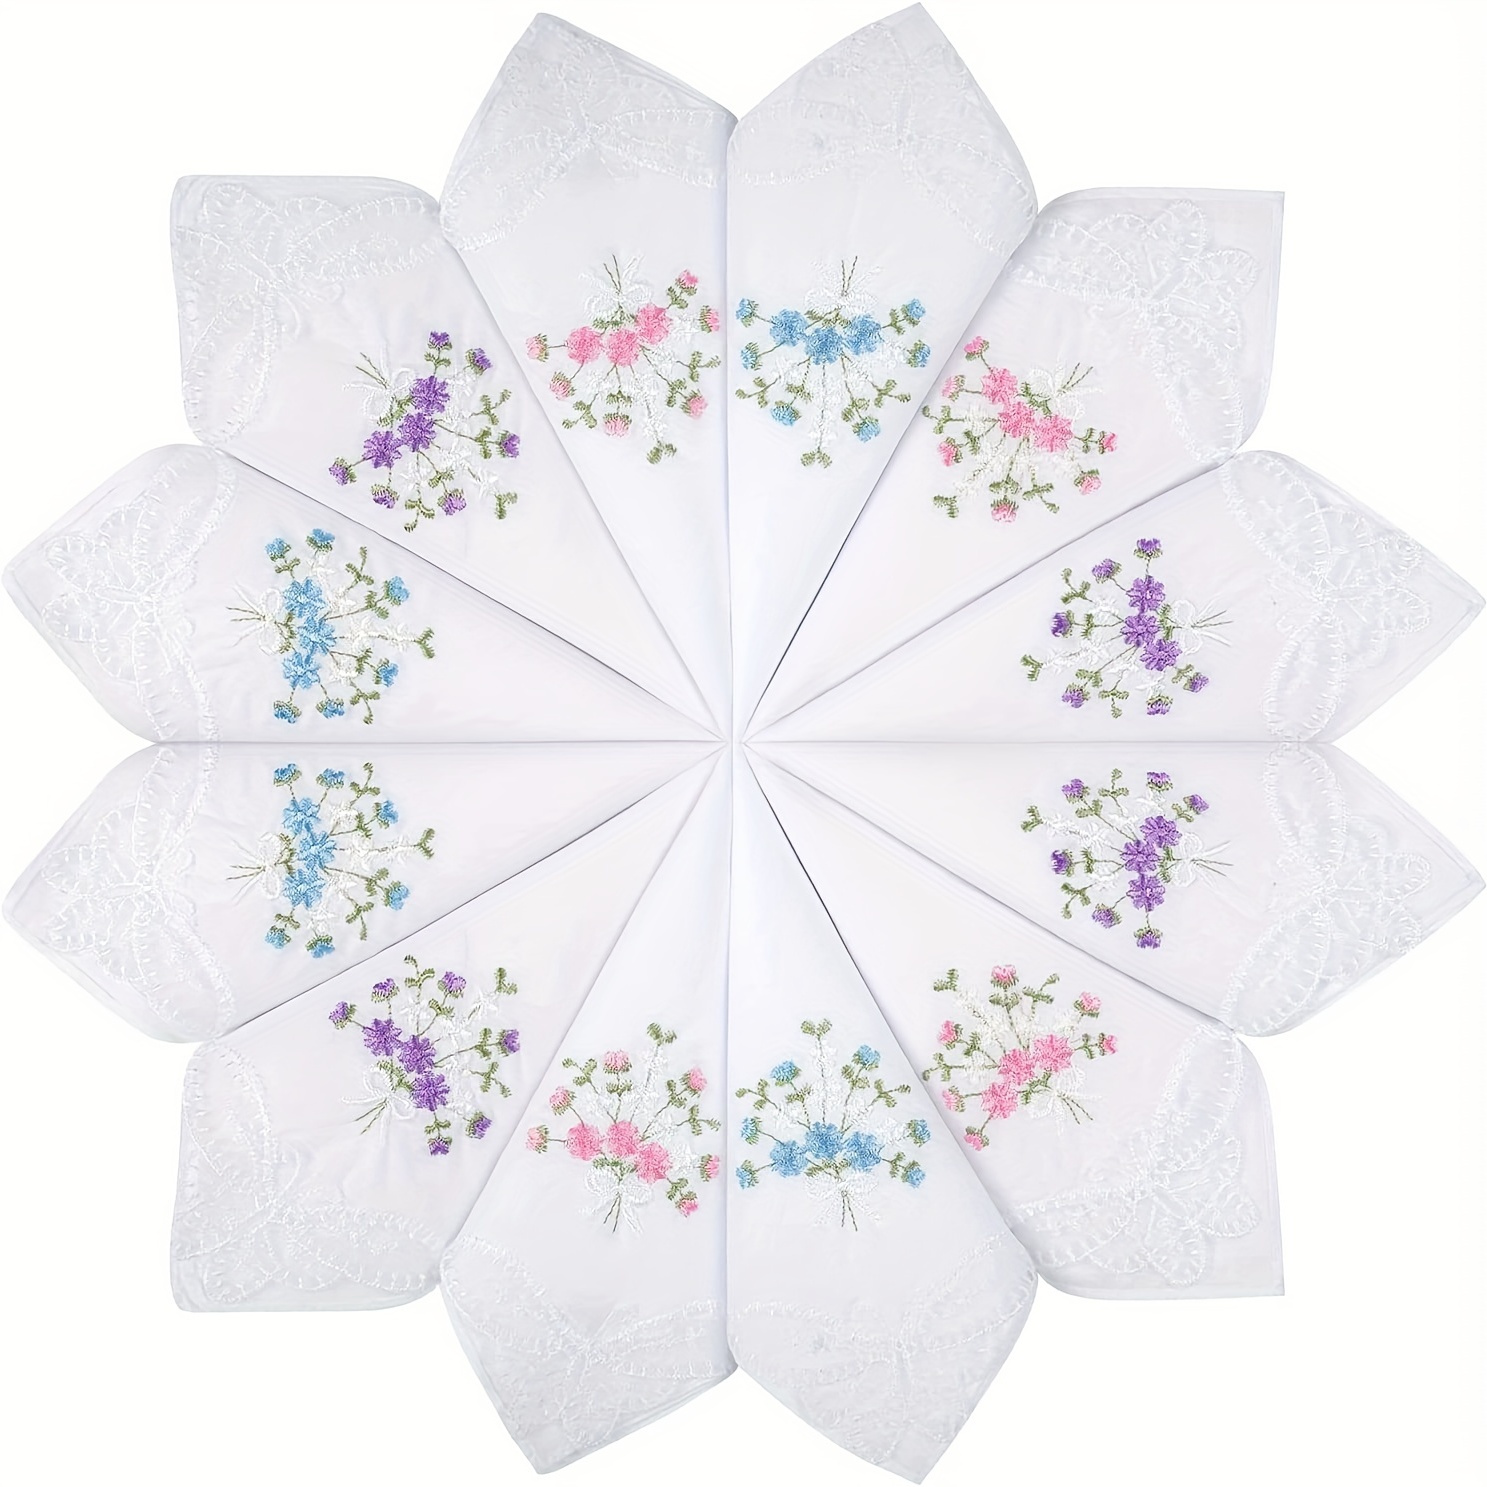 

6pcs Butterfly Lace Embroidered Handkerchief Elegant White Hankies Wedding Supplies Kitchen Decoration Handbag Diy Supplies